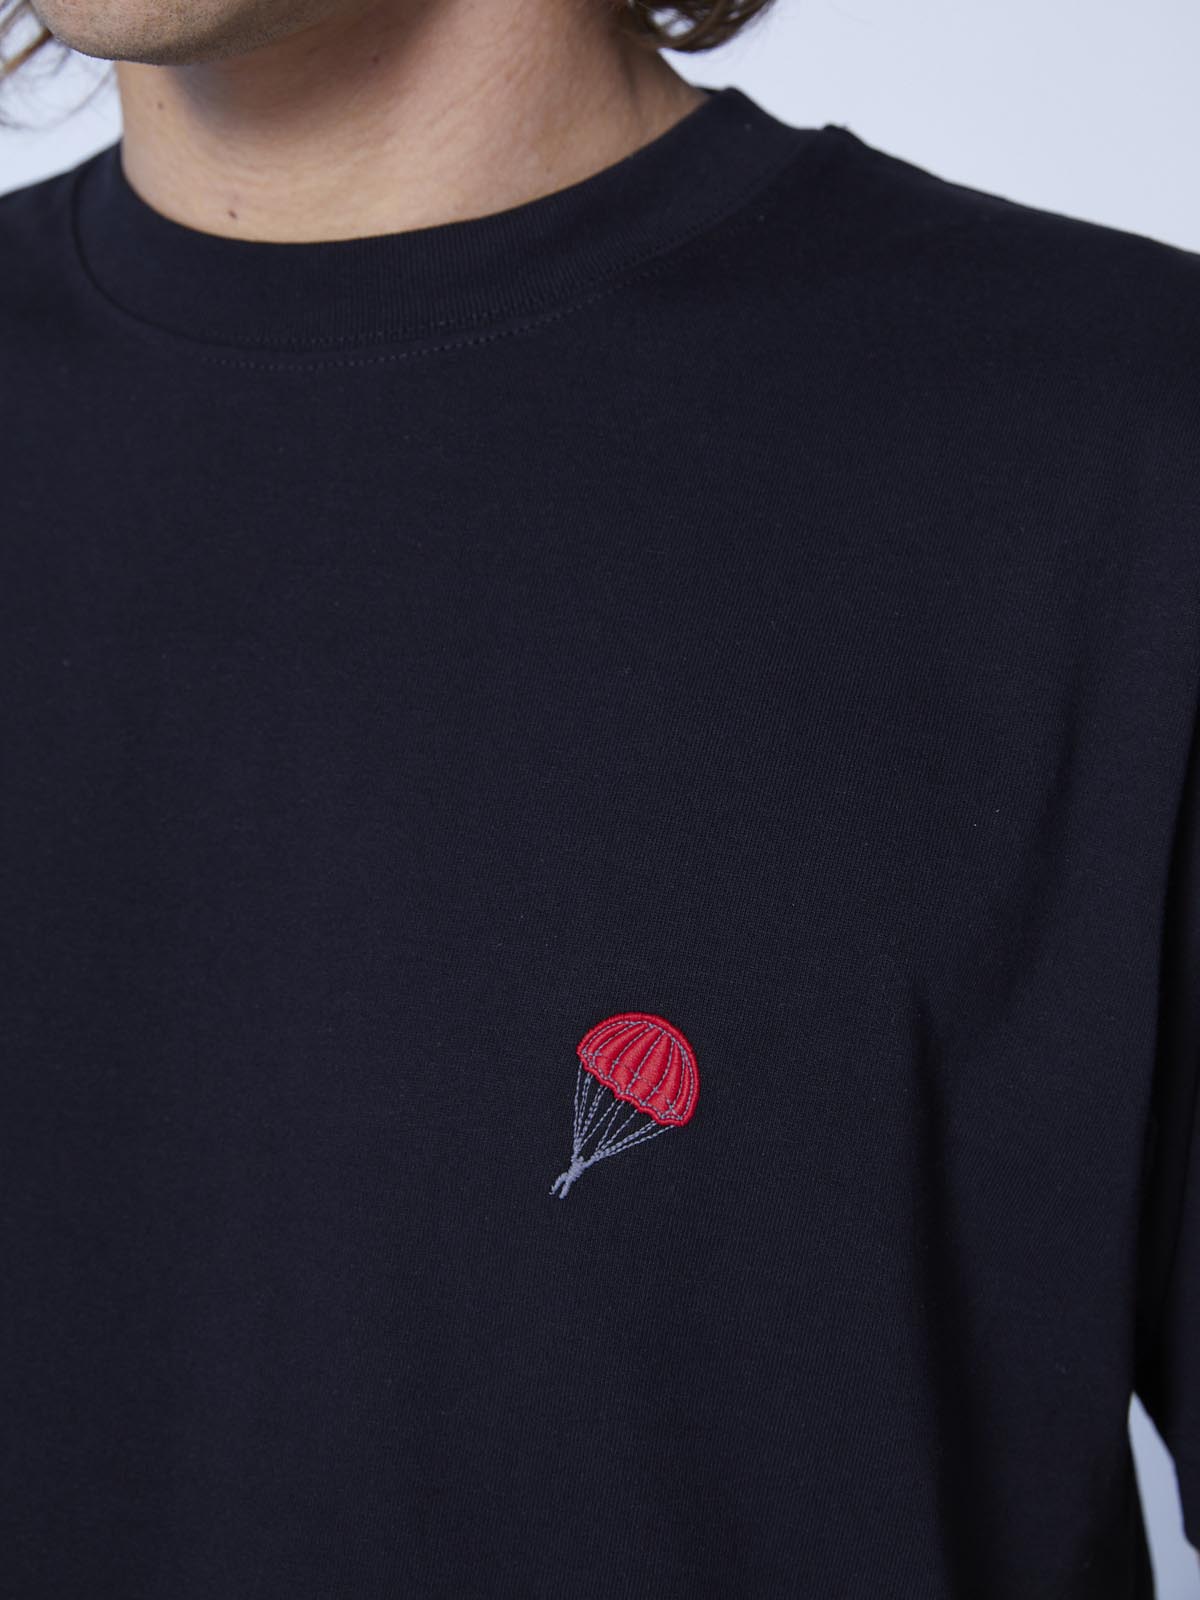 Amba T-shirt with parachute embroidery